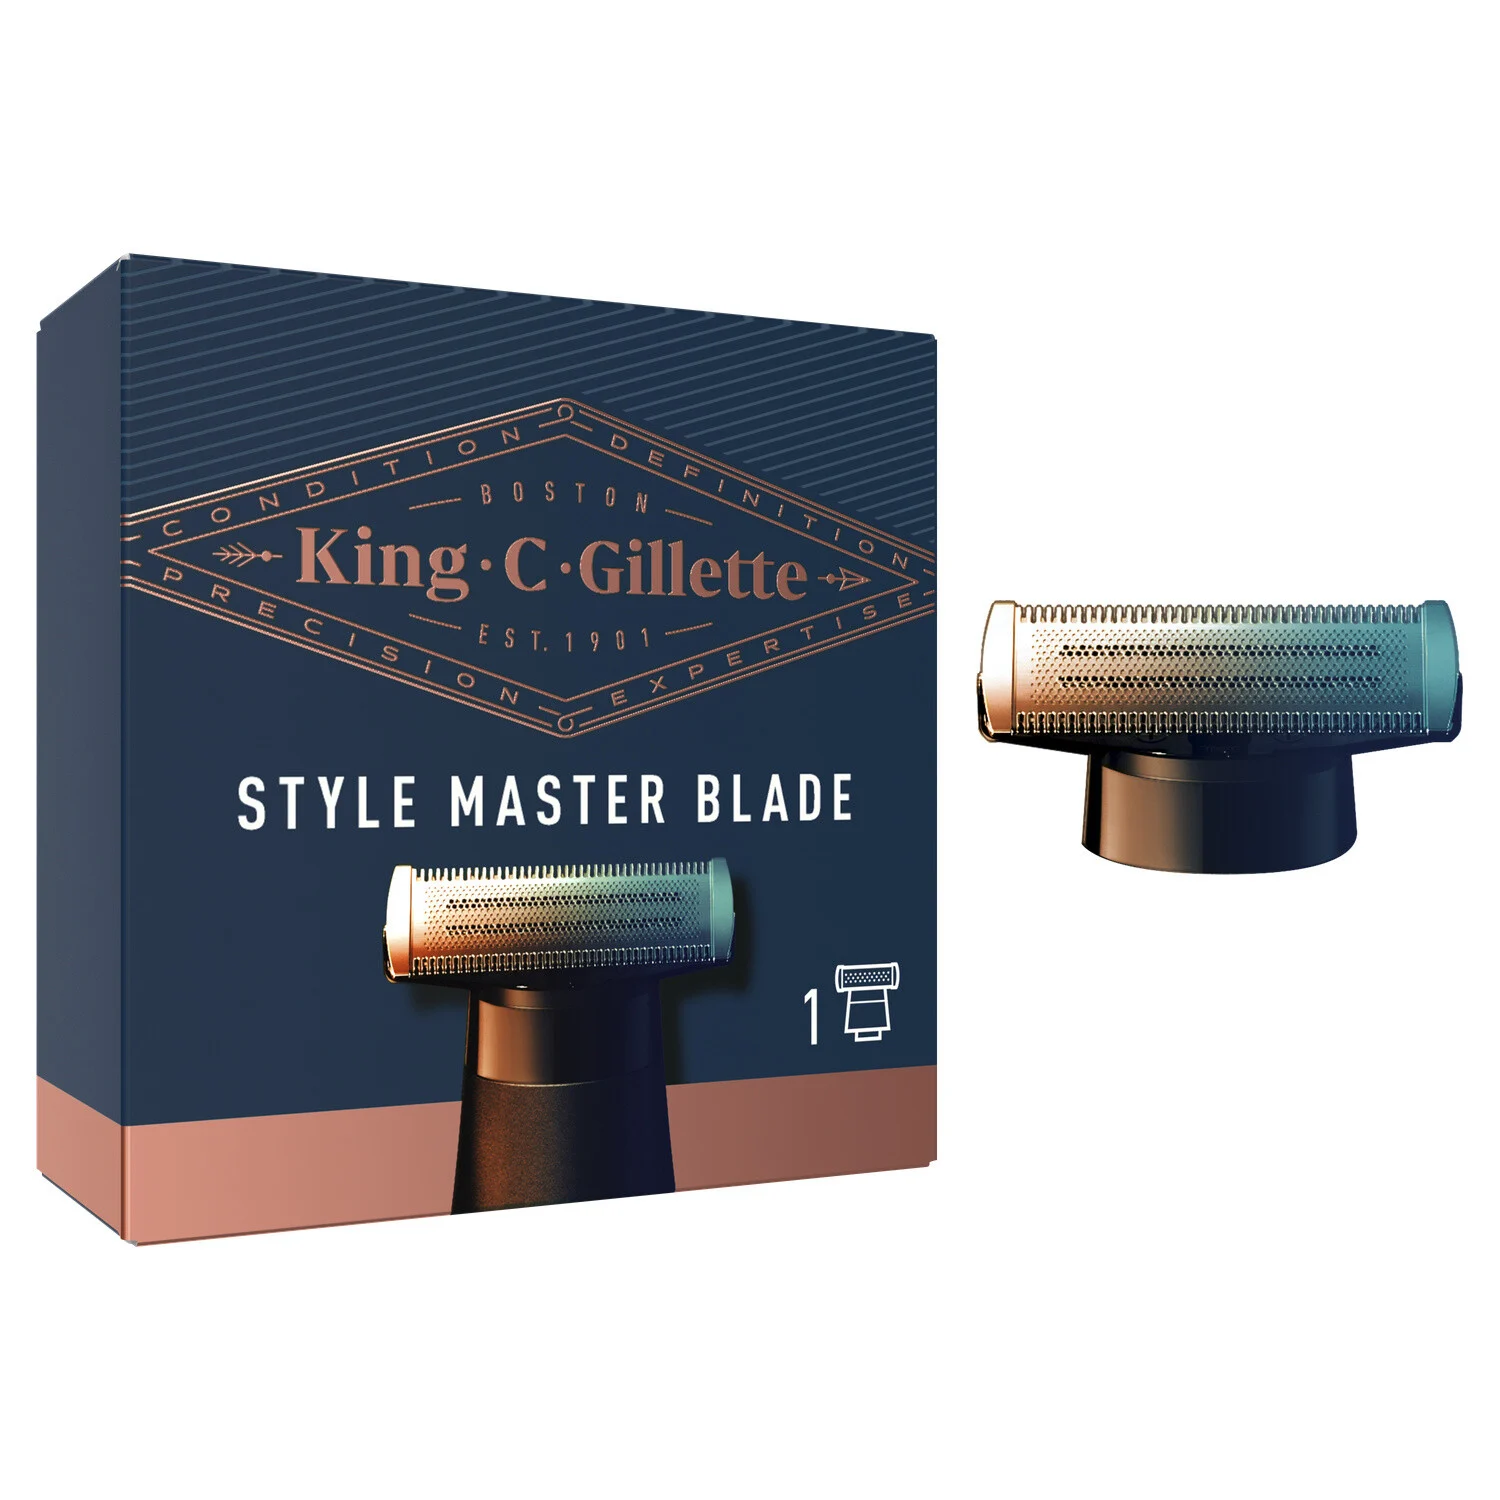 Lame De Tondeuse Style Master 4 Directions King C - Gillette